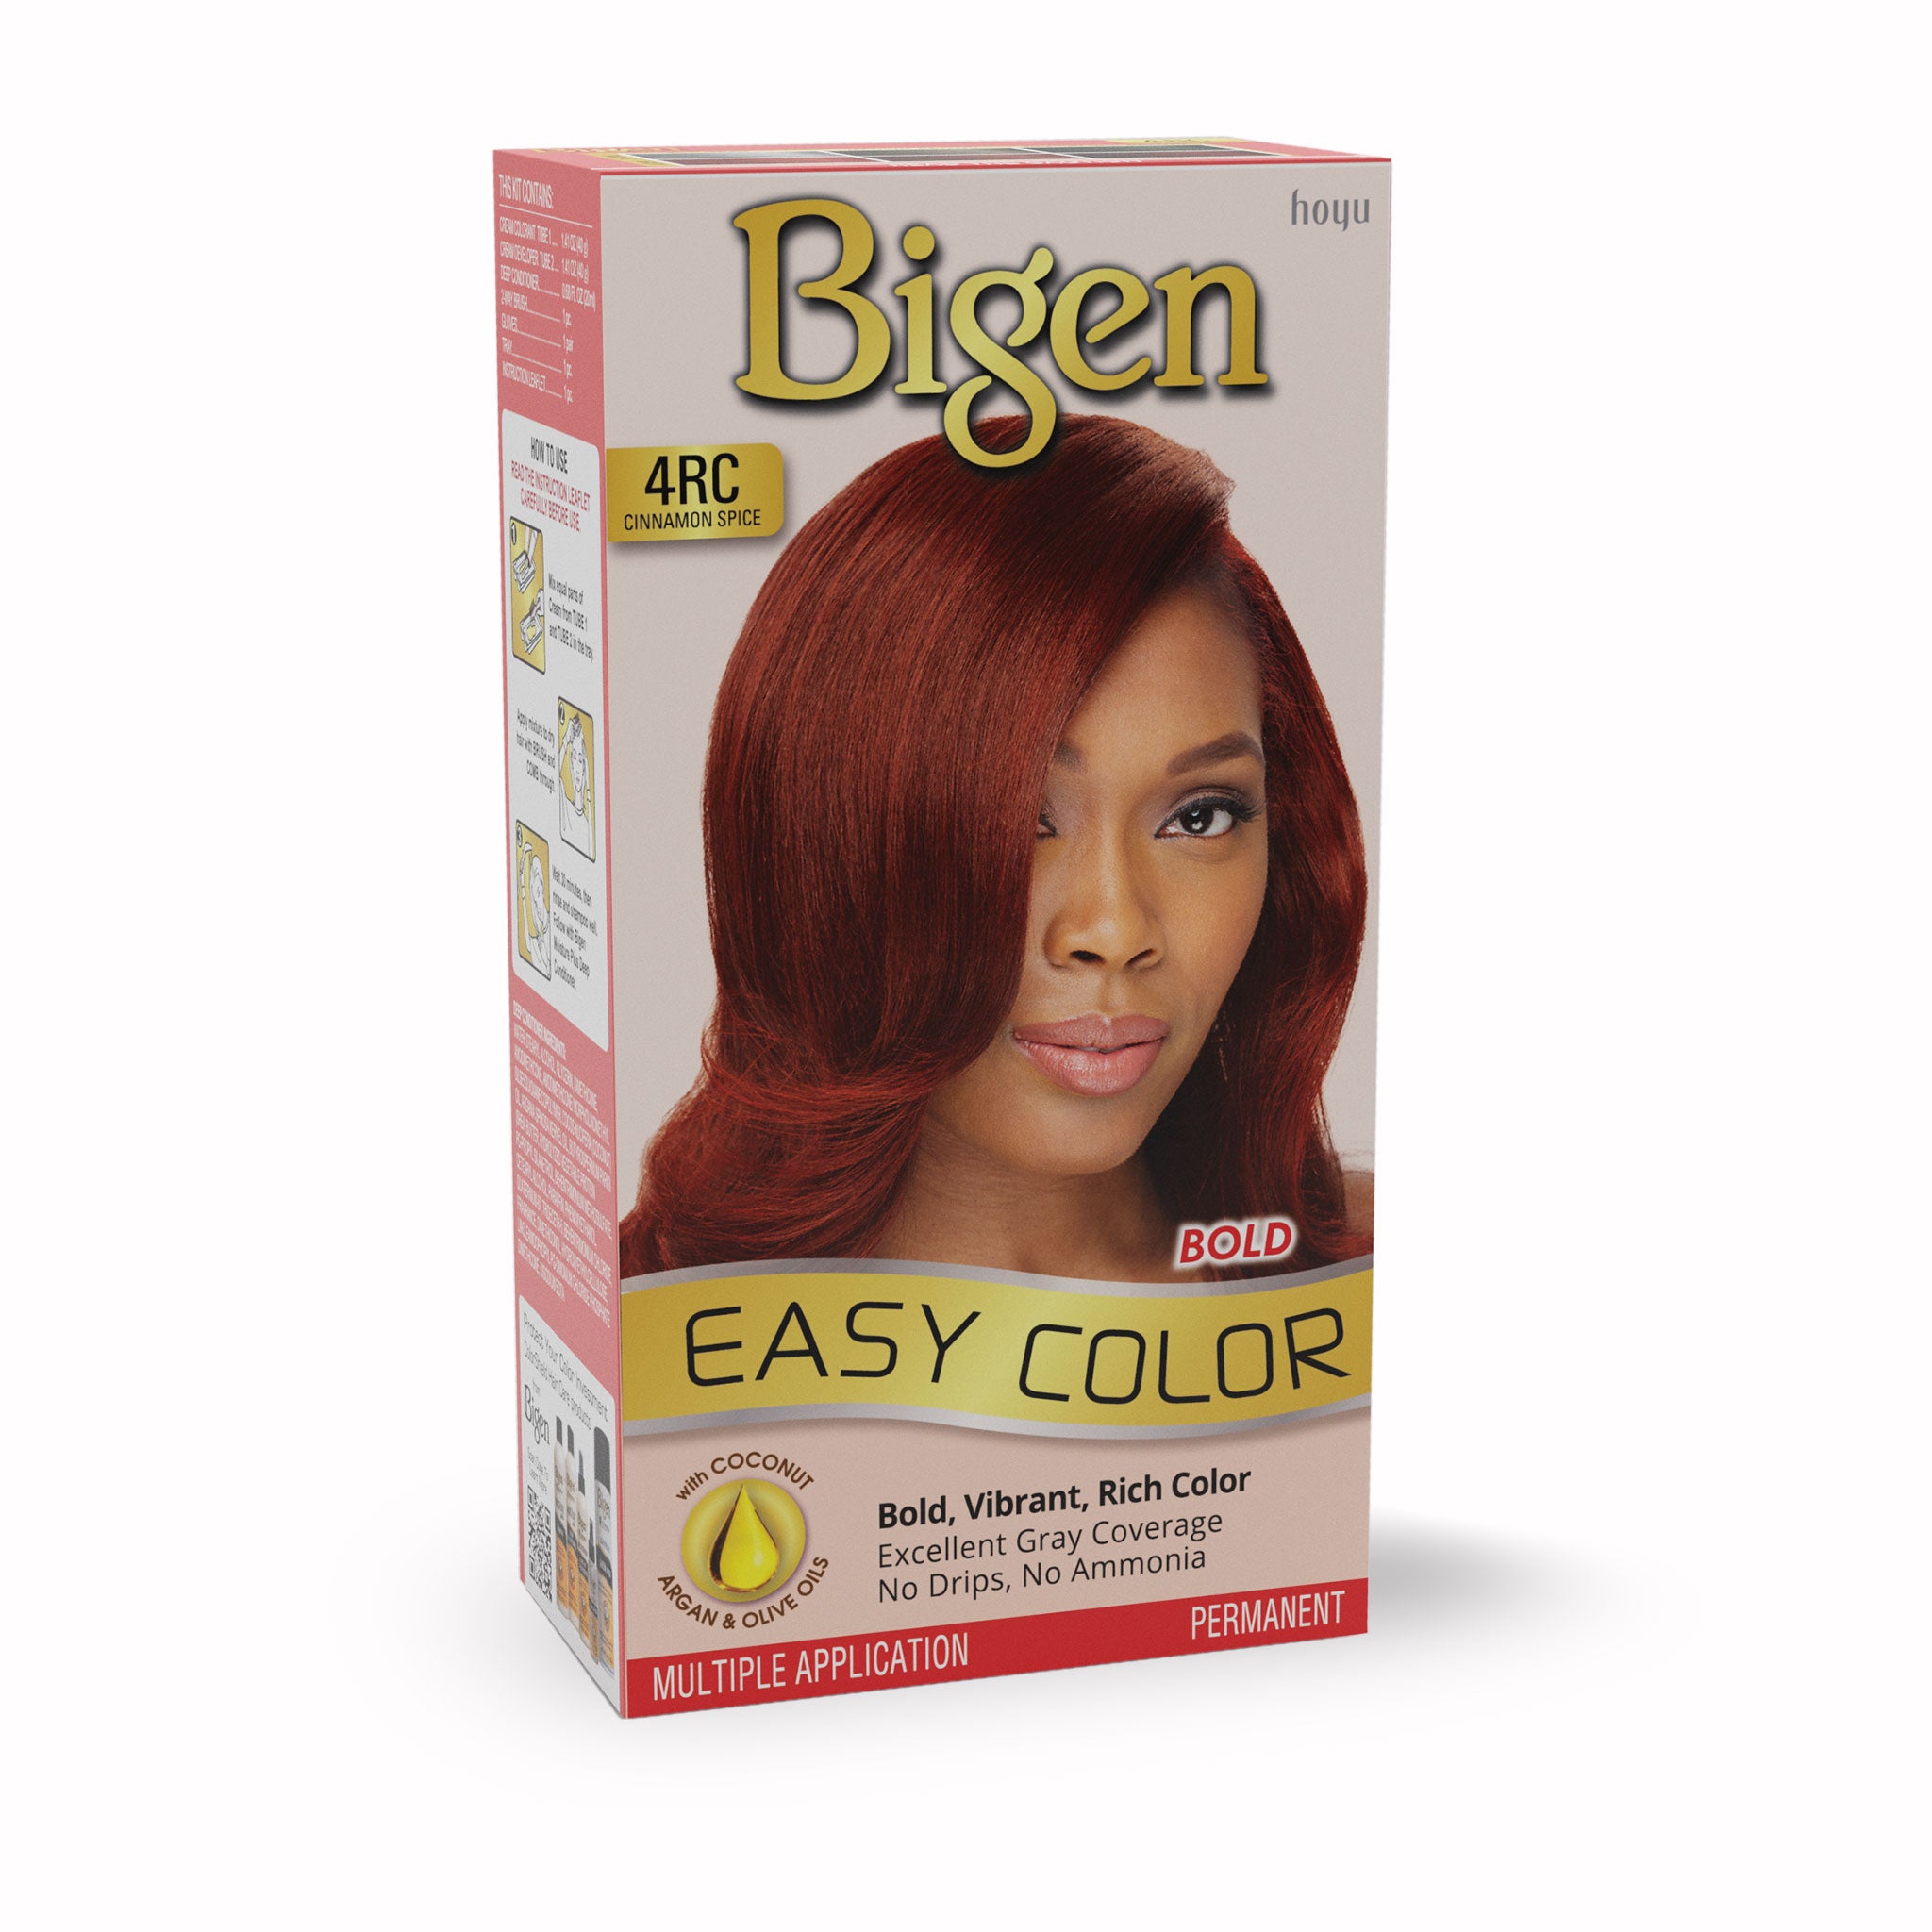 Henna Hair Dye Color Red Wine Mahagony Powder Natural Colorant NO PPD  Ammonia  herbadiet